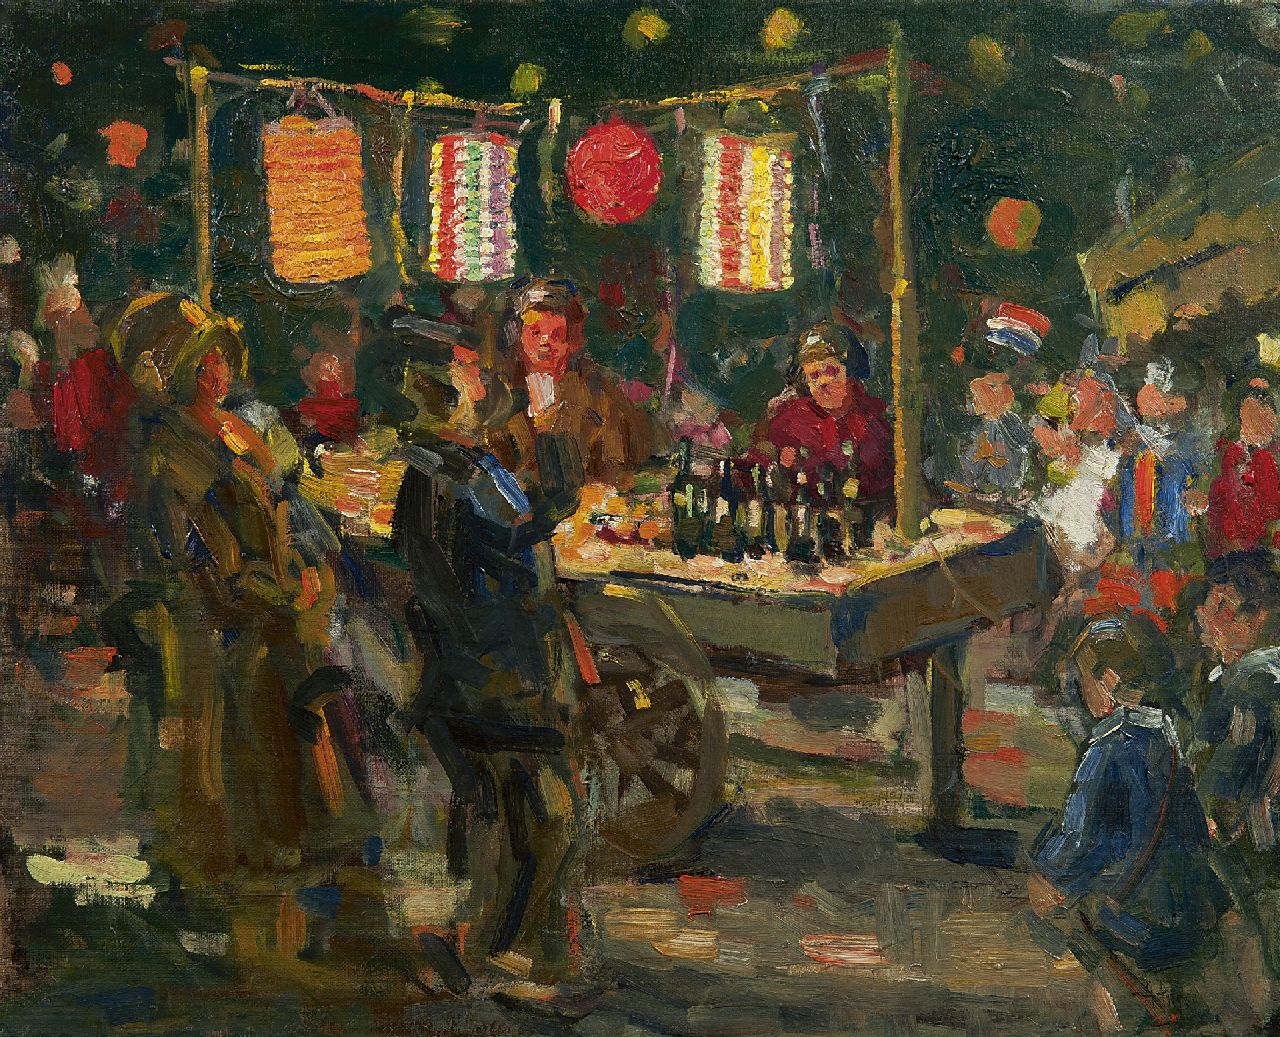 Fresco A.  | Abraham Fresco, Market stall with Chinese Lanterns, Öl auf Leinwand 40,2 x 49,8 cm, signed l.r.